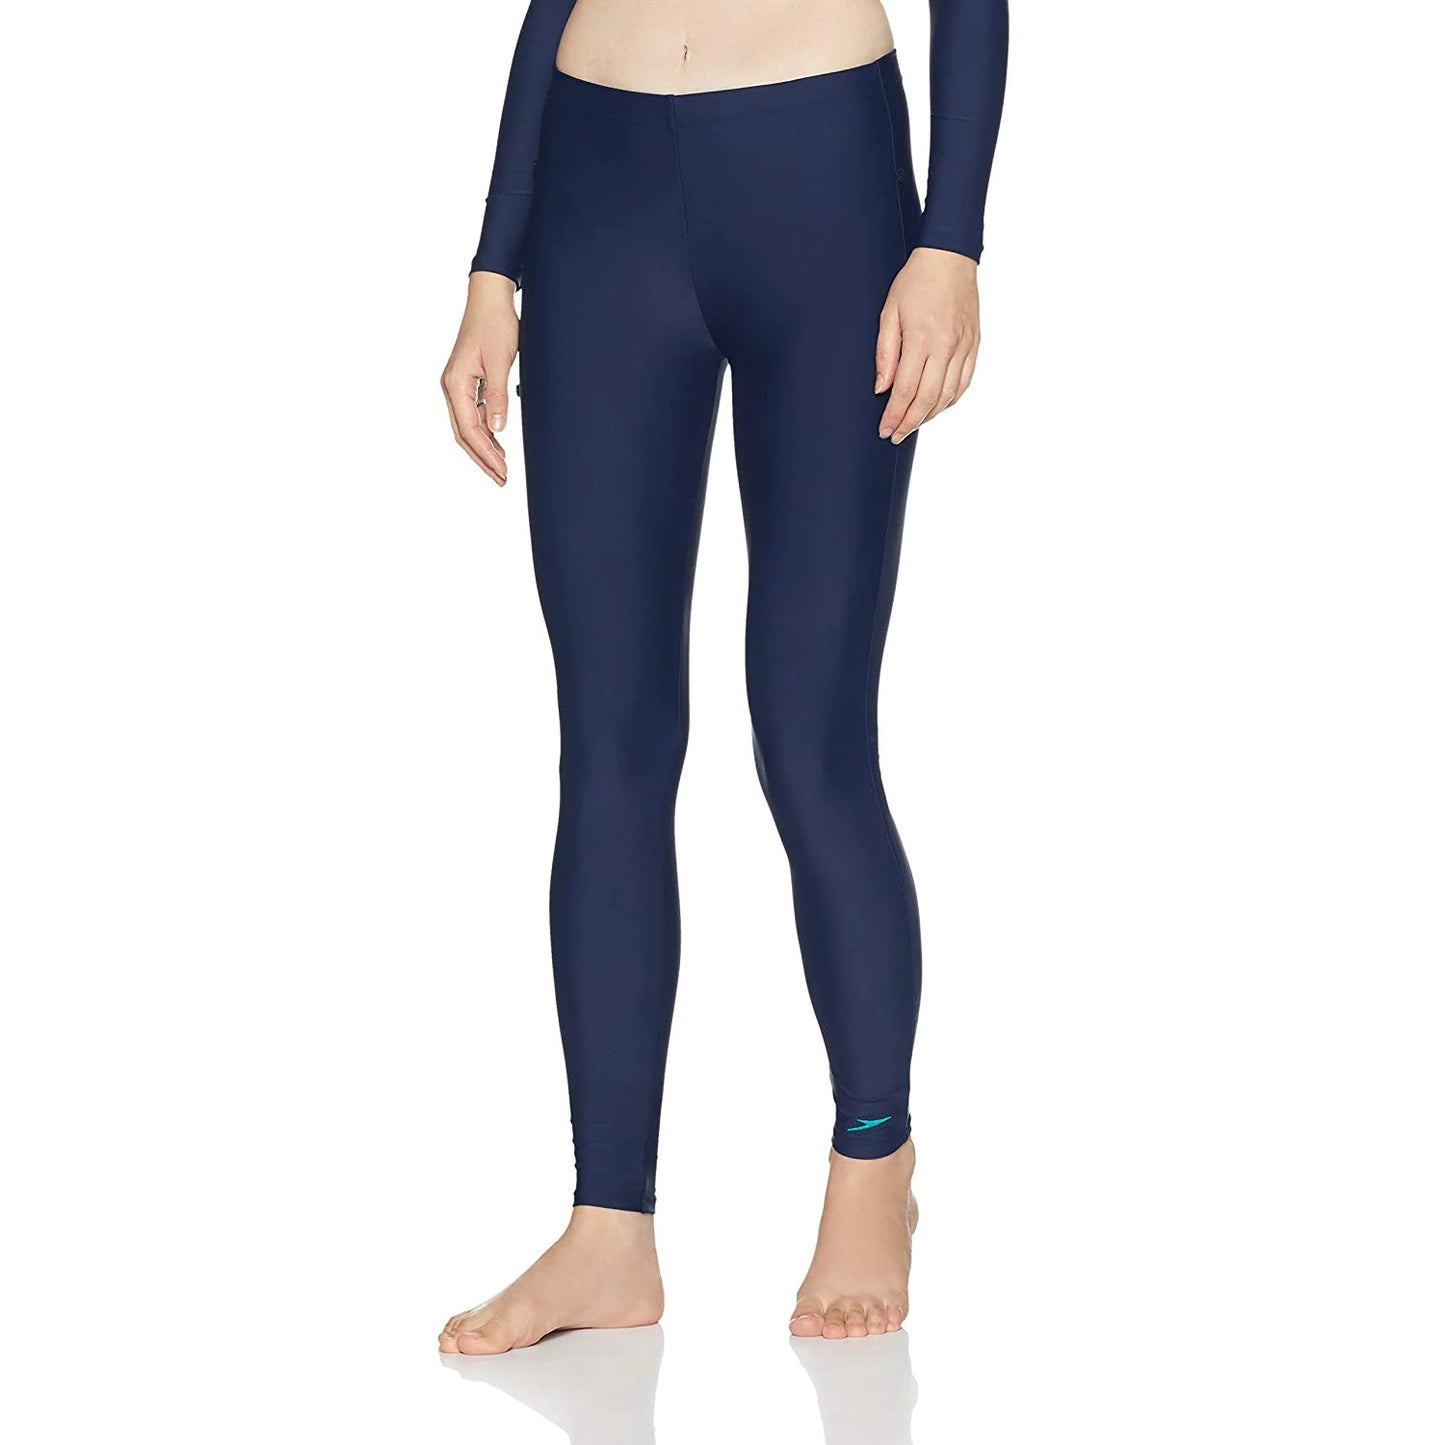 Speedo Female Swimwear 2 Piece Full Body Suit (Navy/Lunarglow Aop) - Best Price online Prokicksports.com